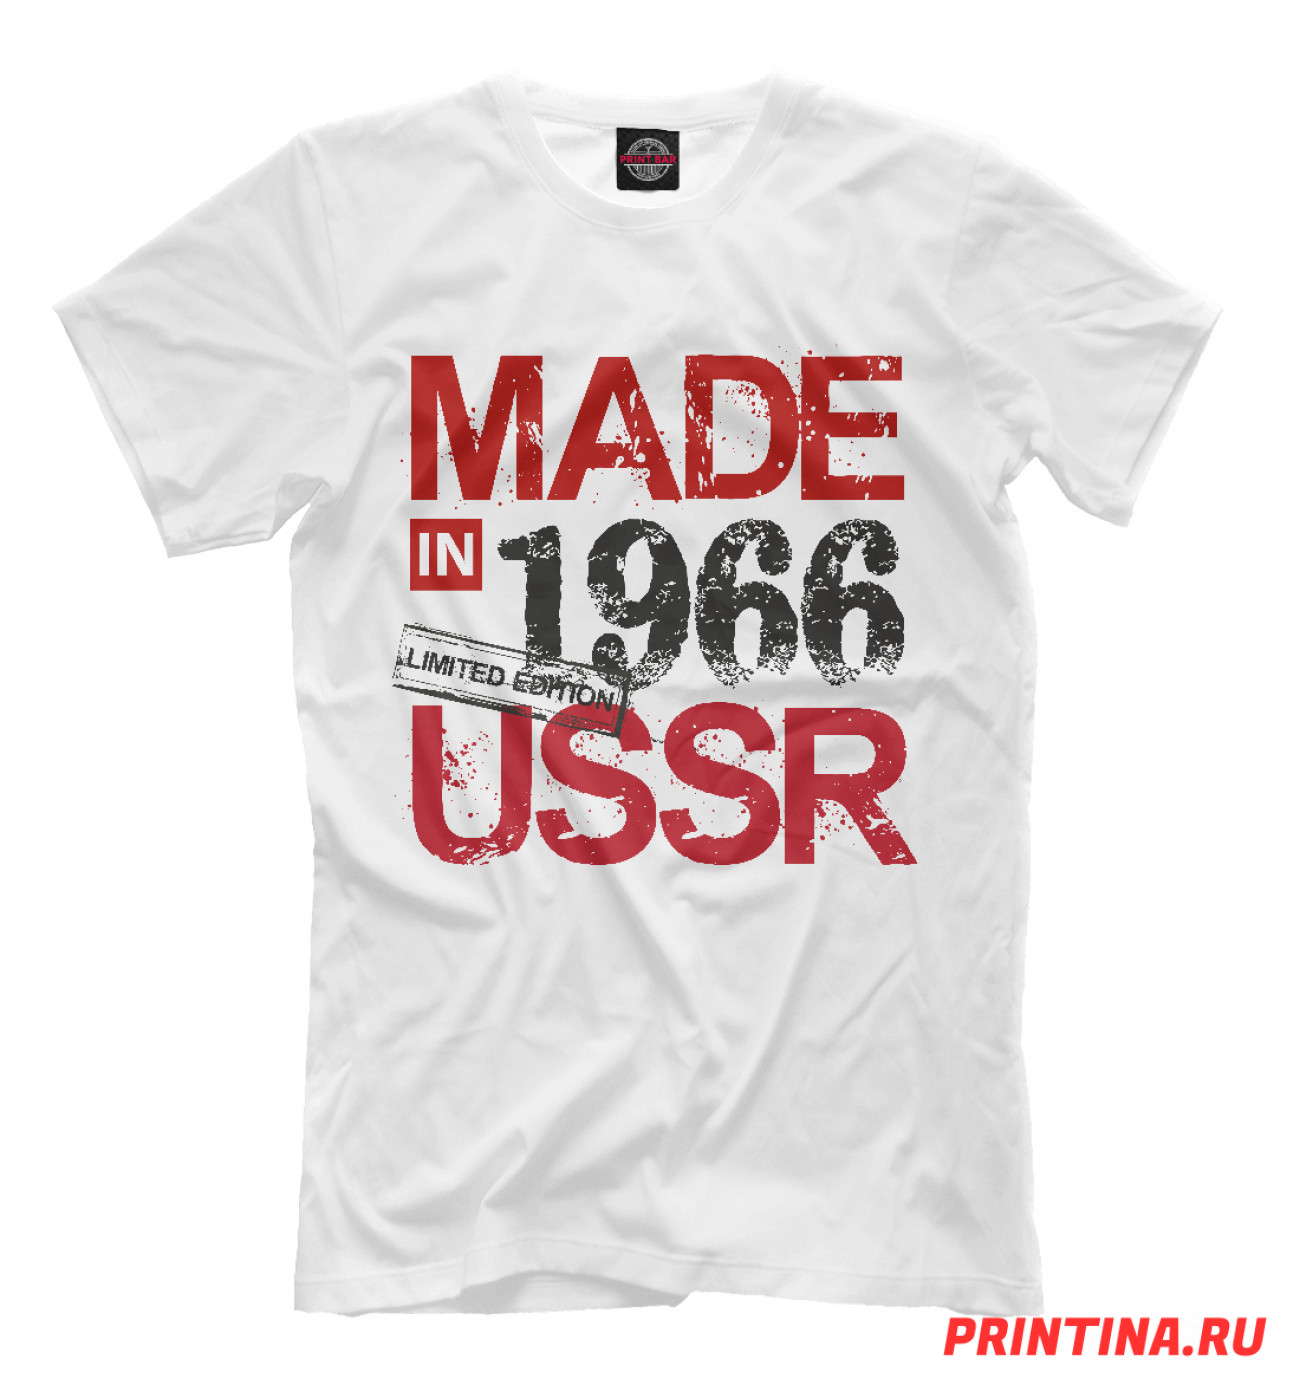 Мужская Футболка Made in USSR 1966, артикул: DHH-709050-fut-2